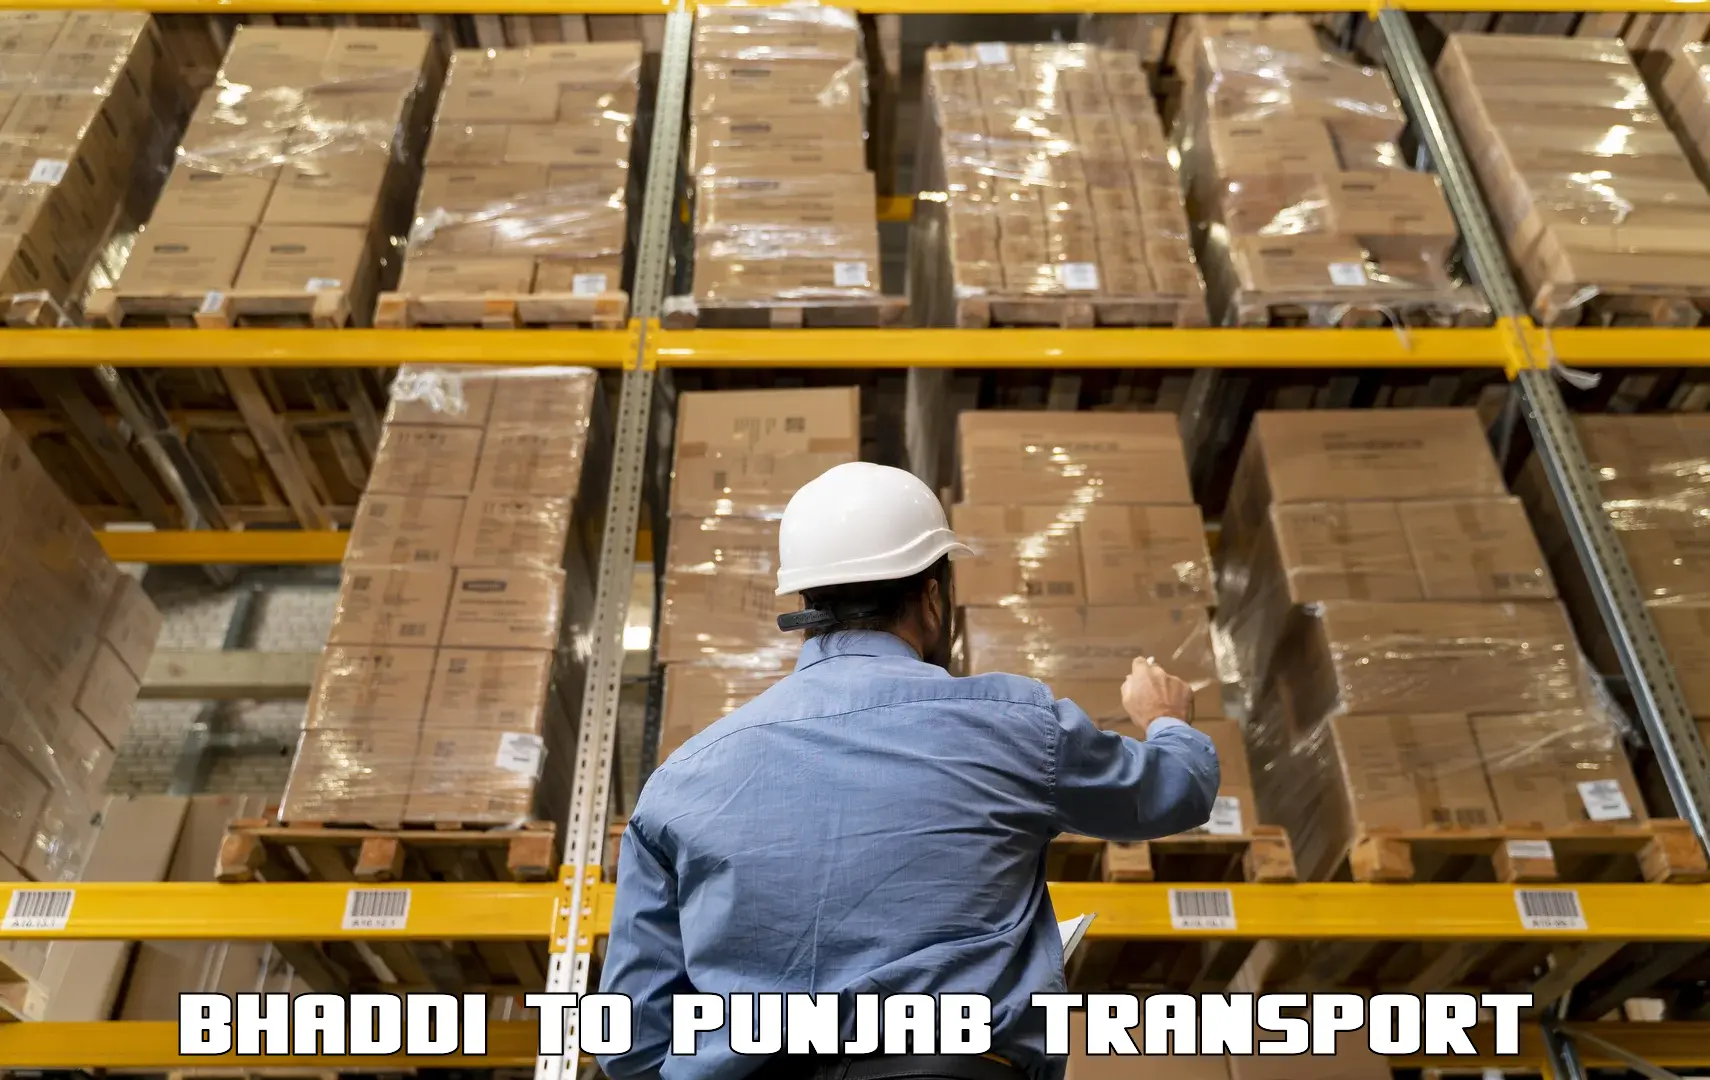 Transport shared services Bhaddi to Amritsar